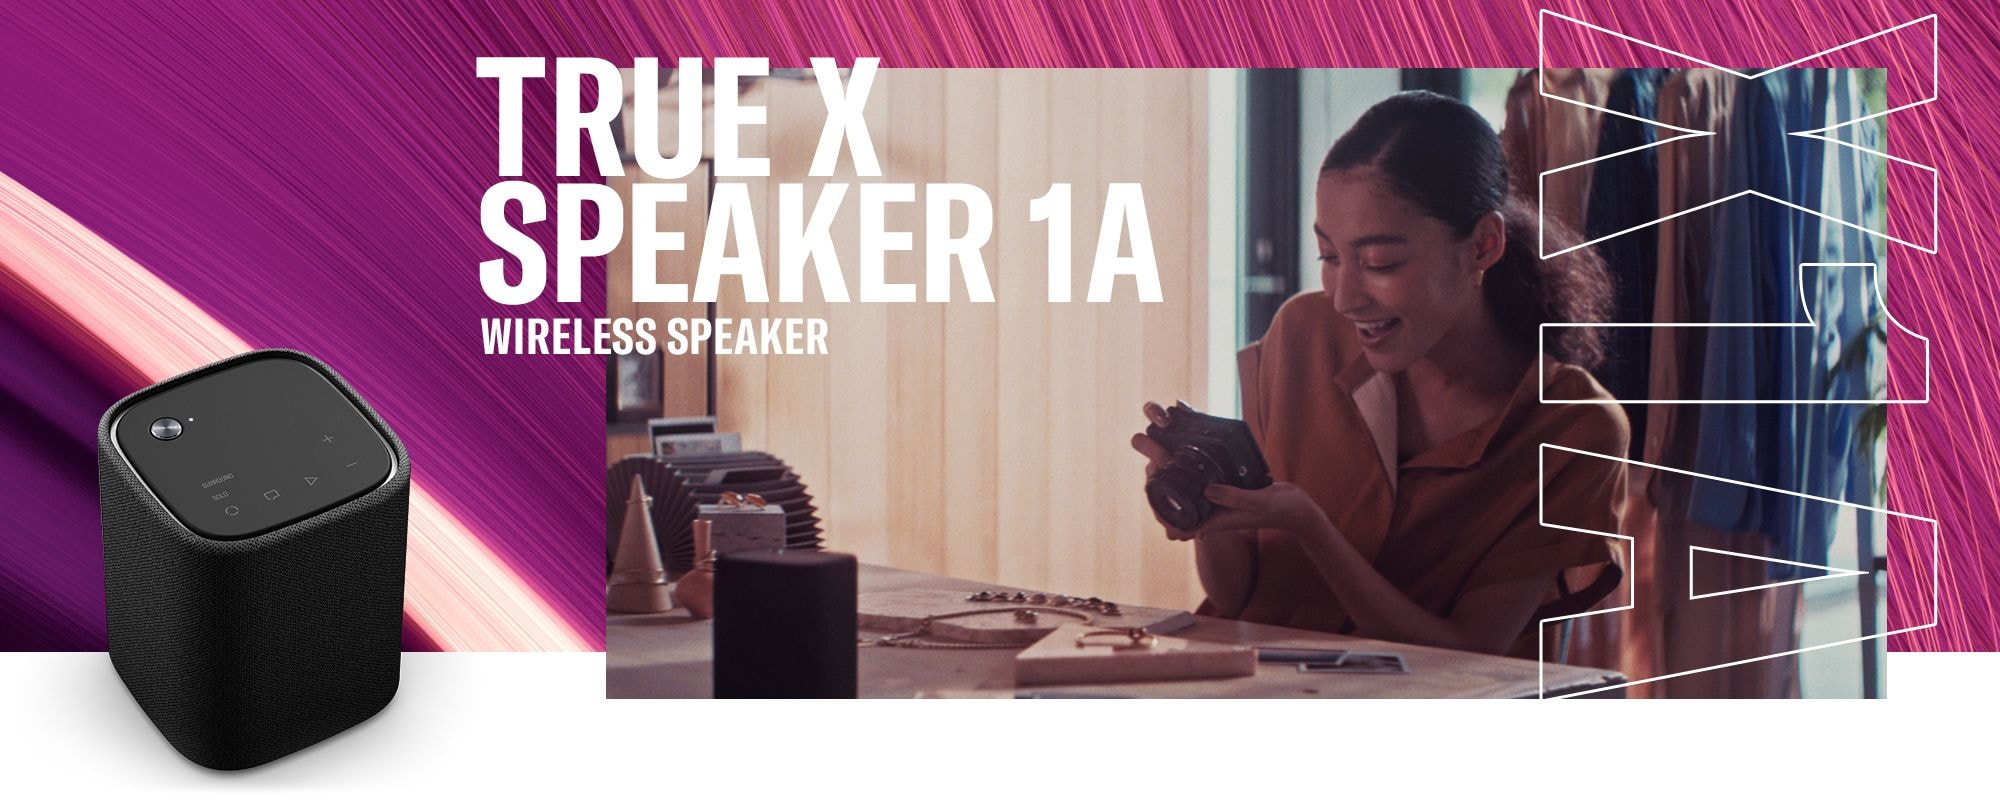 Image showing Yamaha TRUE X SPEAKER 1A Portable Surround Speaker Header banner - Desktop